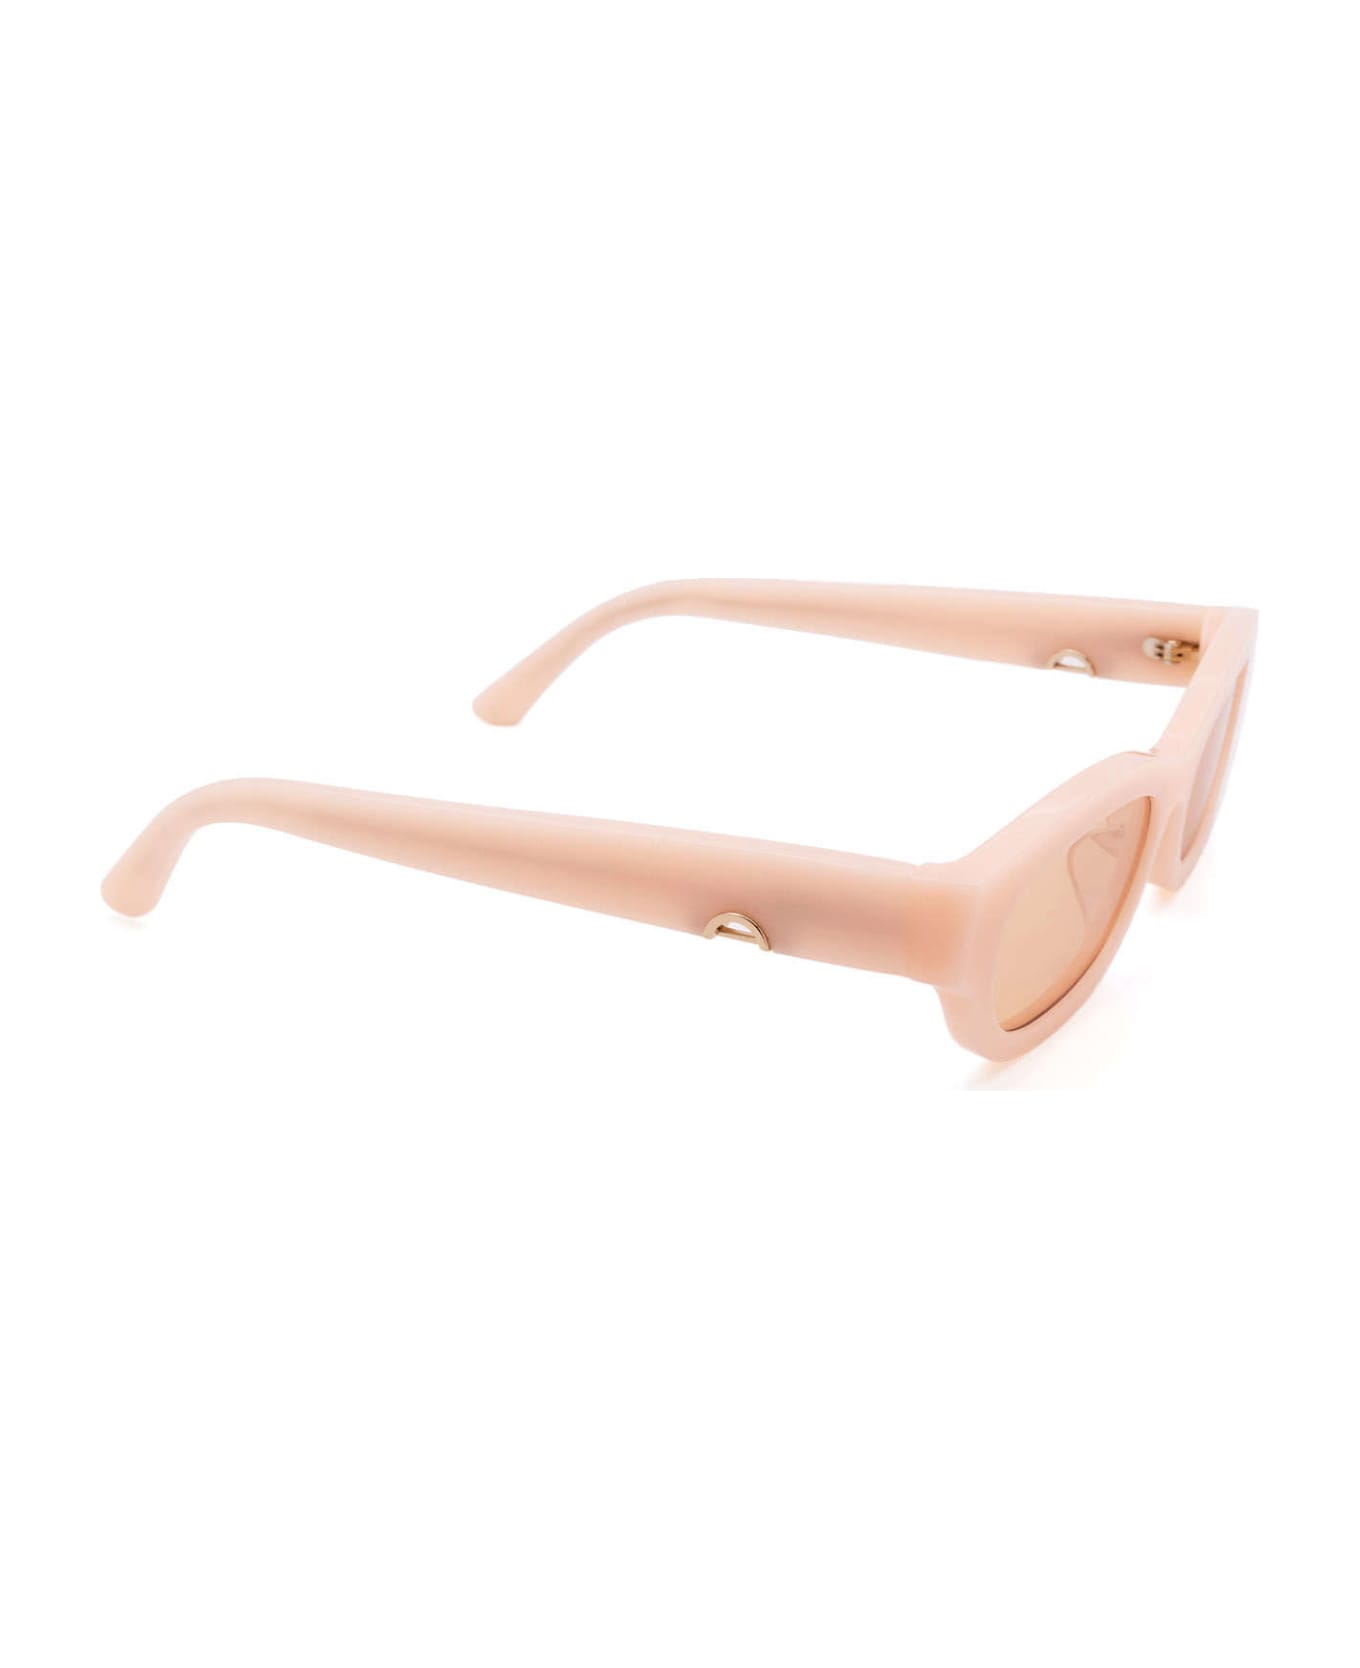 Huma Tojo Pink Sunglasses - Pink